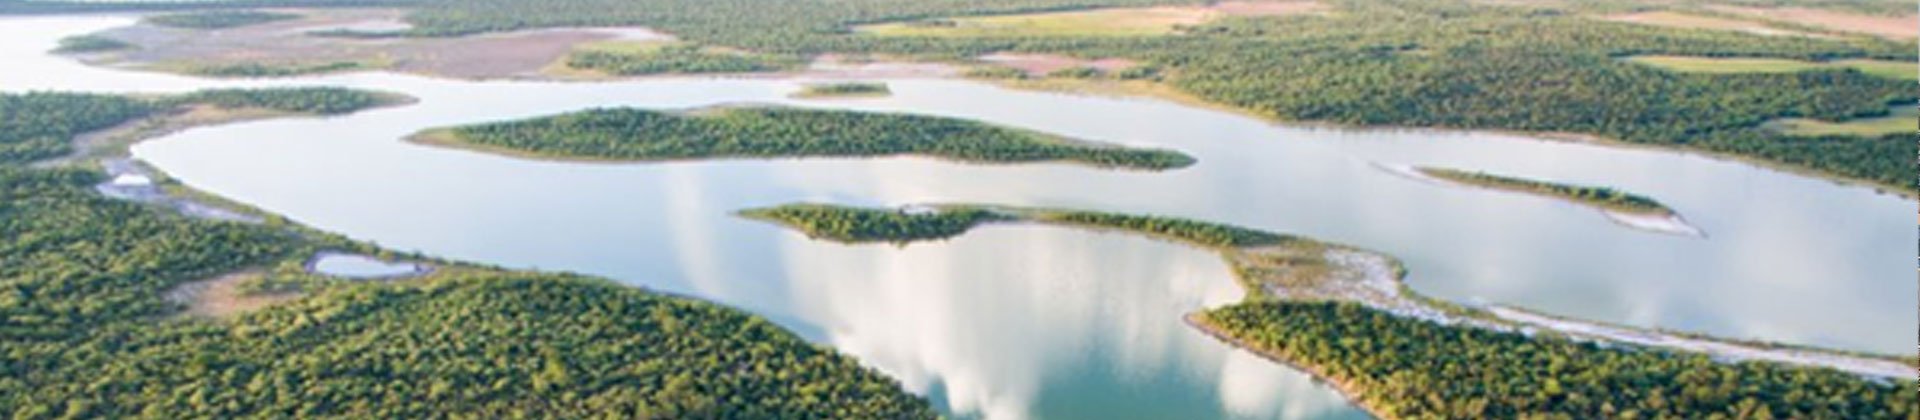 Lagoon, Chaco, Paraguay